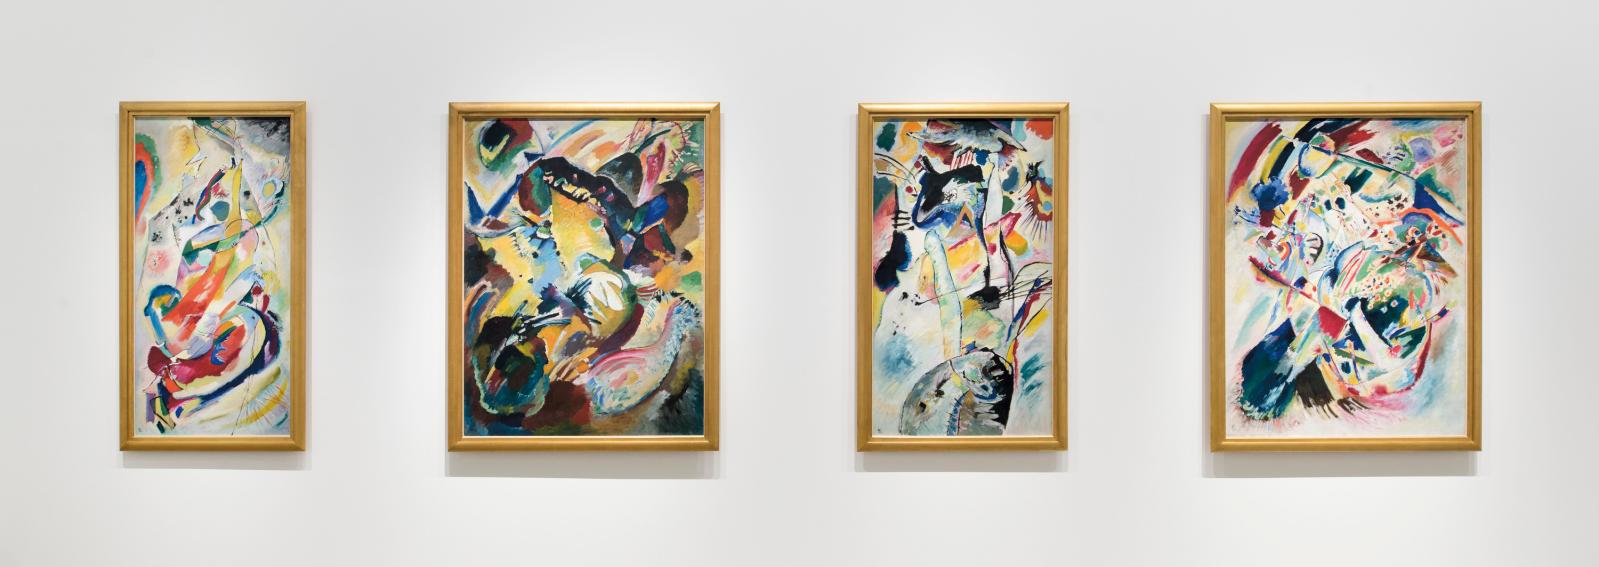 Wassily Kandinsky, vue d'installation, exposition "Les Clefs d'une passion". © The Museum of Modern Art, New-York pour les œuvres de Wassi